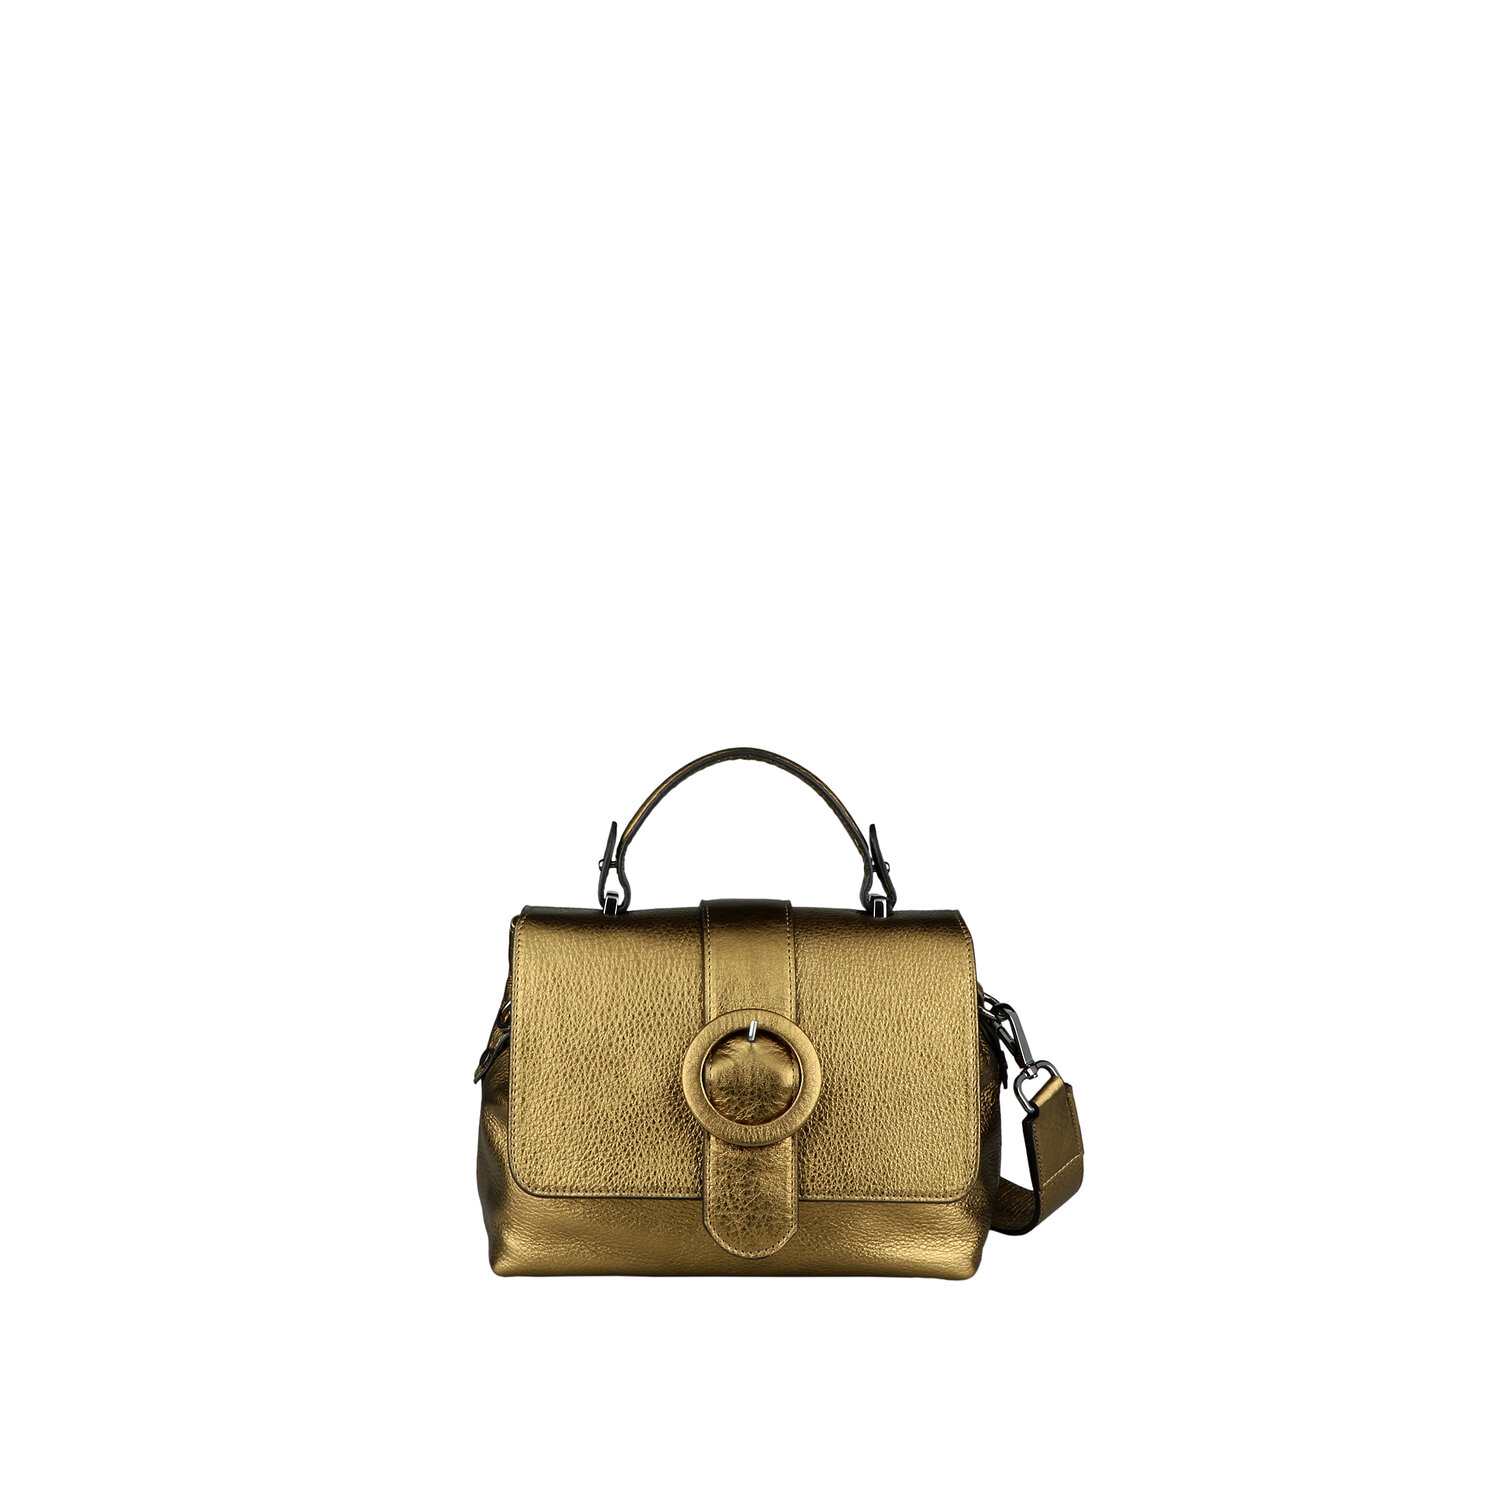 Handbag BAHIA Bronze metallic leather mini tote — Sgamo